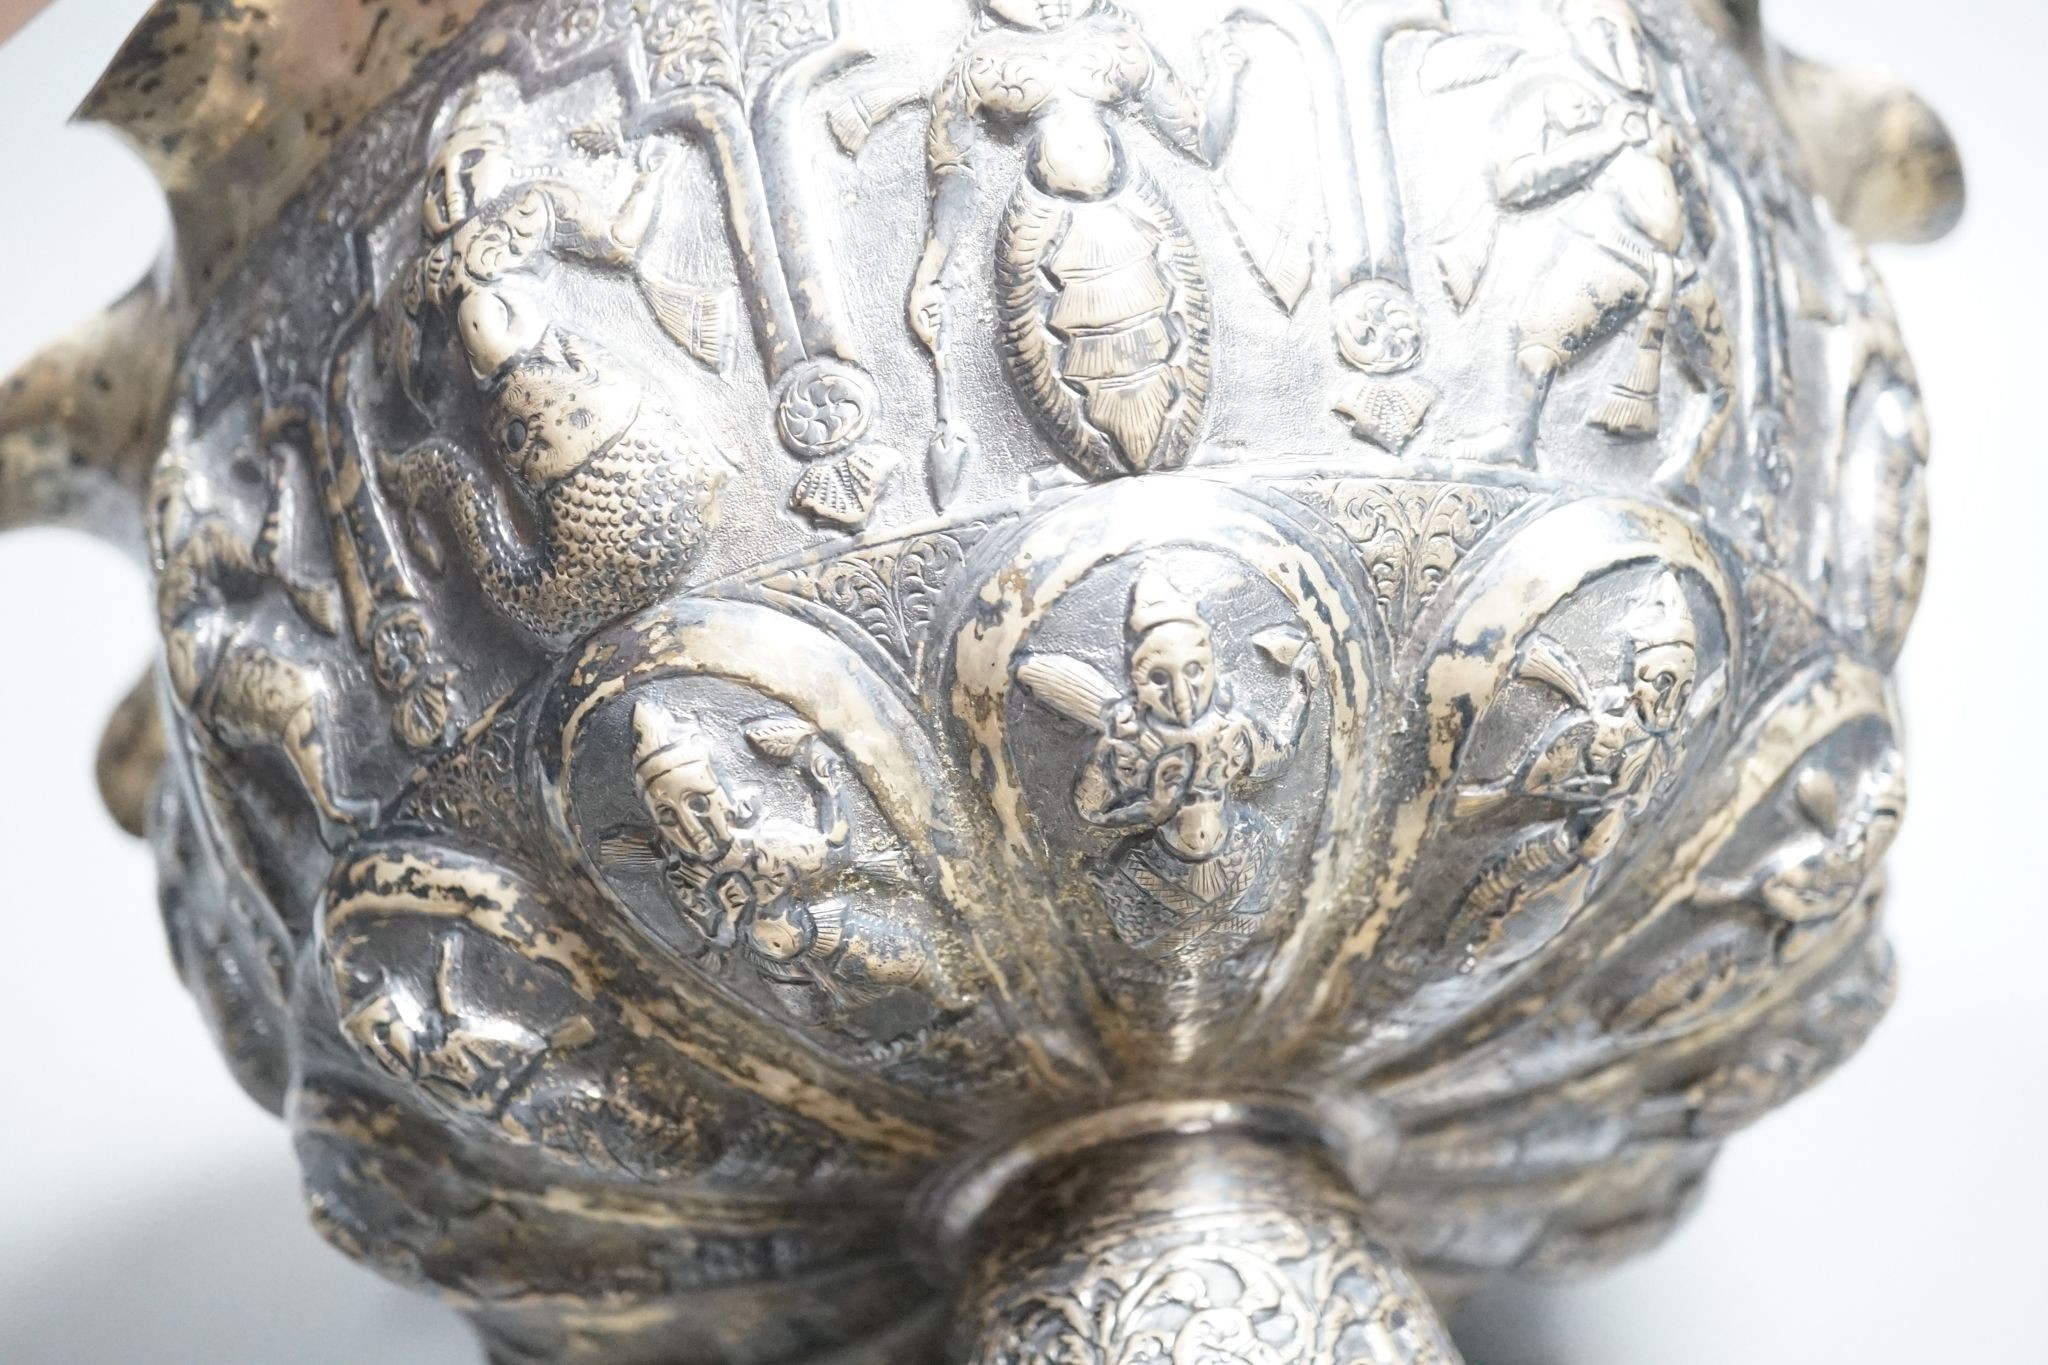 A late 19th century Burmese embossed white metal pedestal bowl, with wavy border, diameter, 27.2cm, 20.5oz.